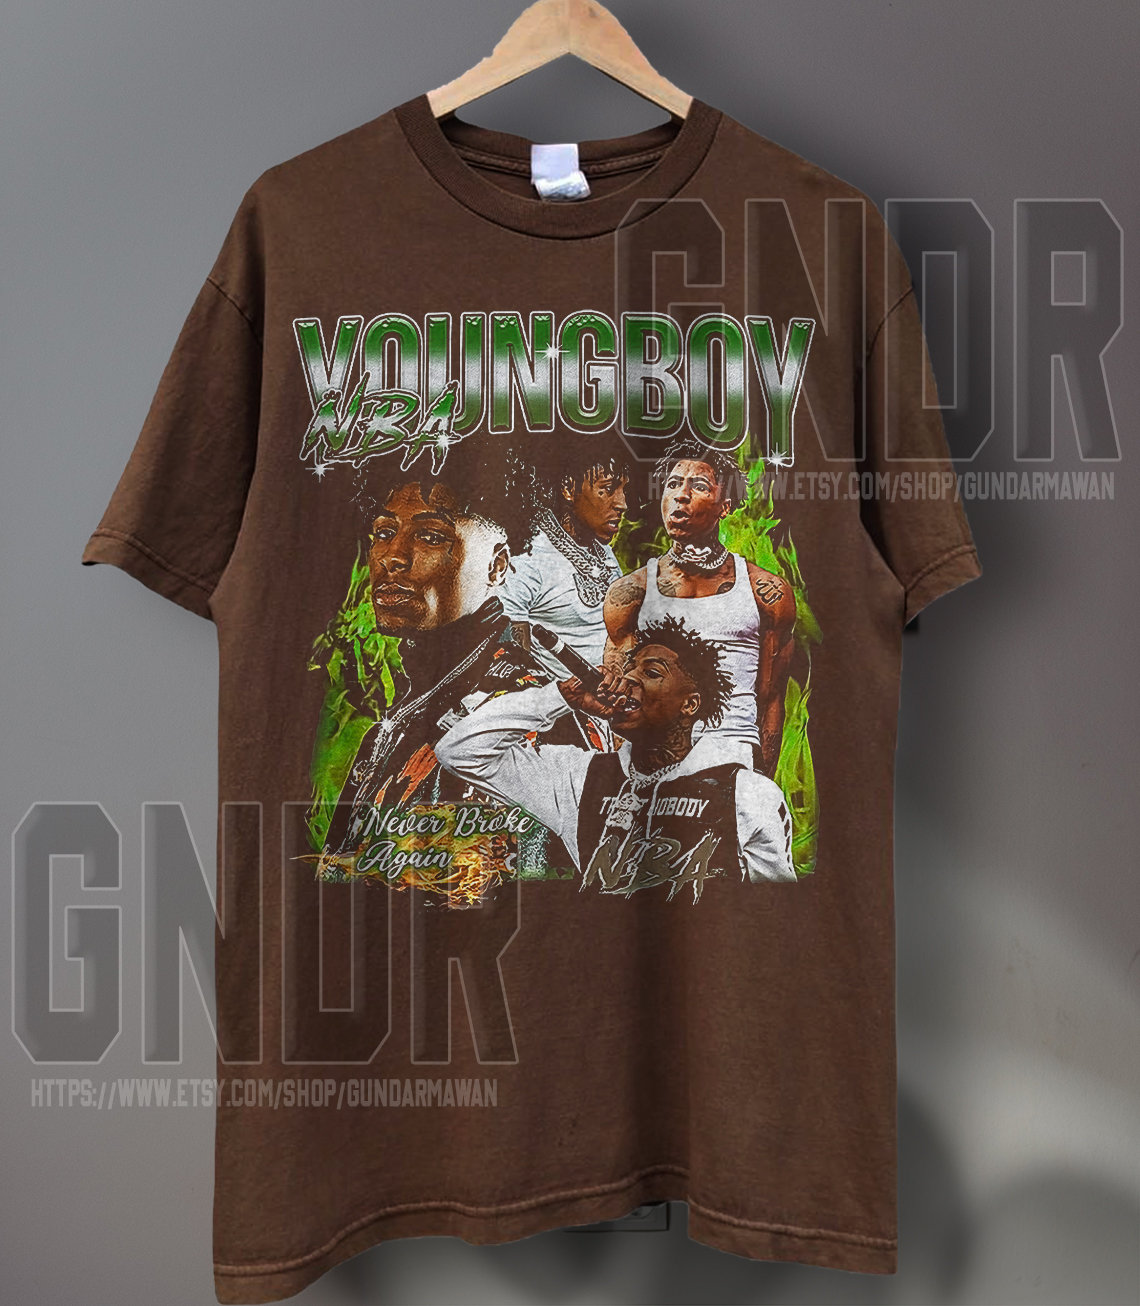 NBA Hip Hop Vintage Bootleg Retro 90s Shirt, YoungBoy Never Broke Again Shirt, Youngboy Tour shirt, Hip Hop Music Raptee LPO65